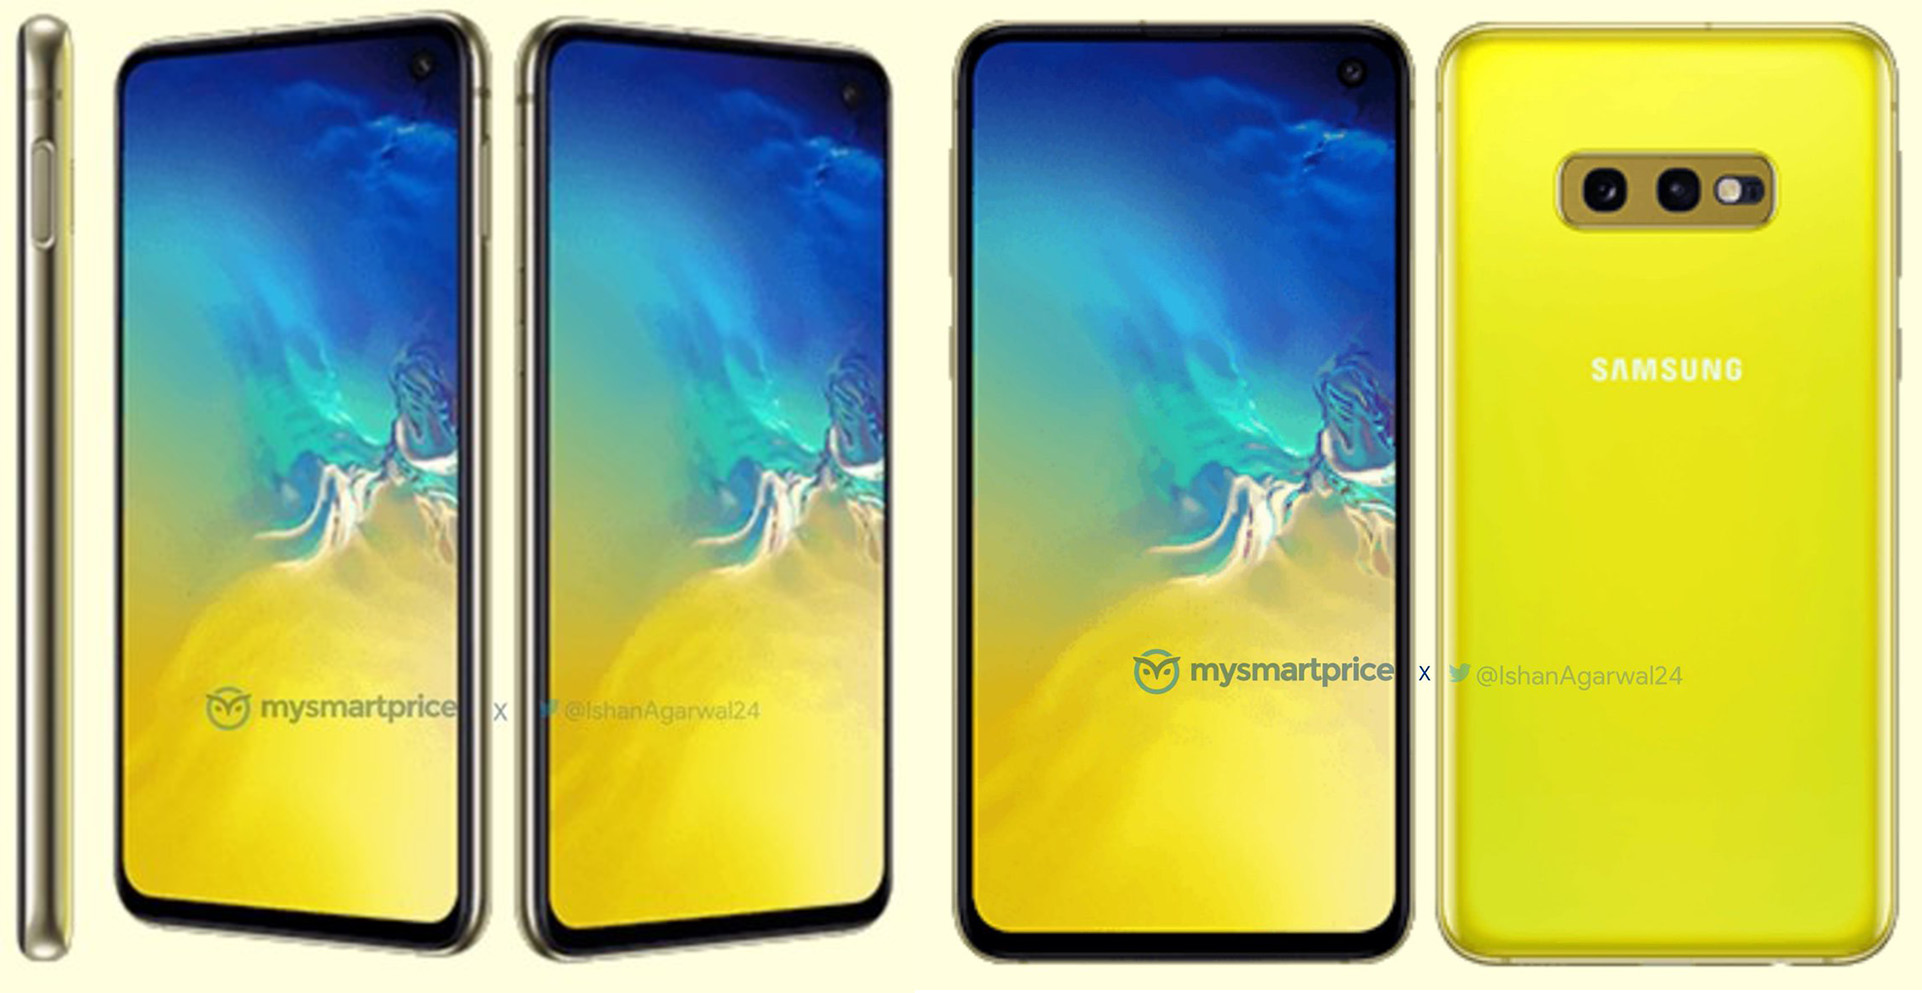 Samsung Galaxy S10e press render